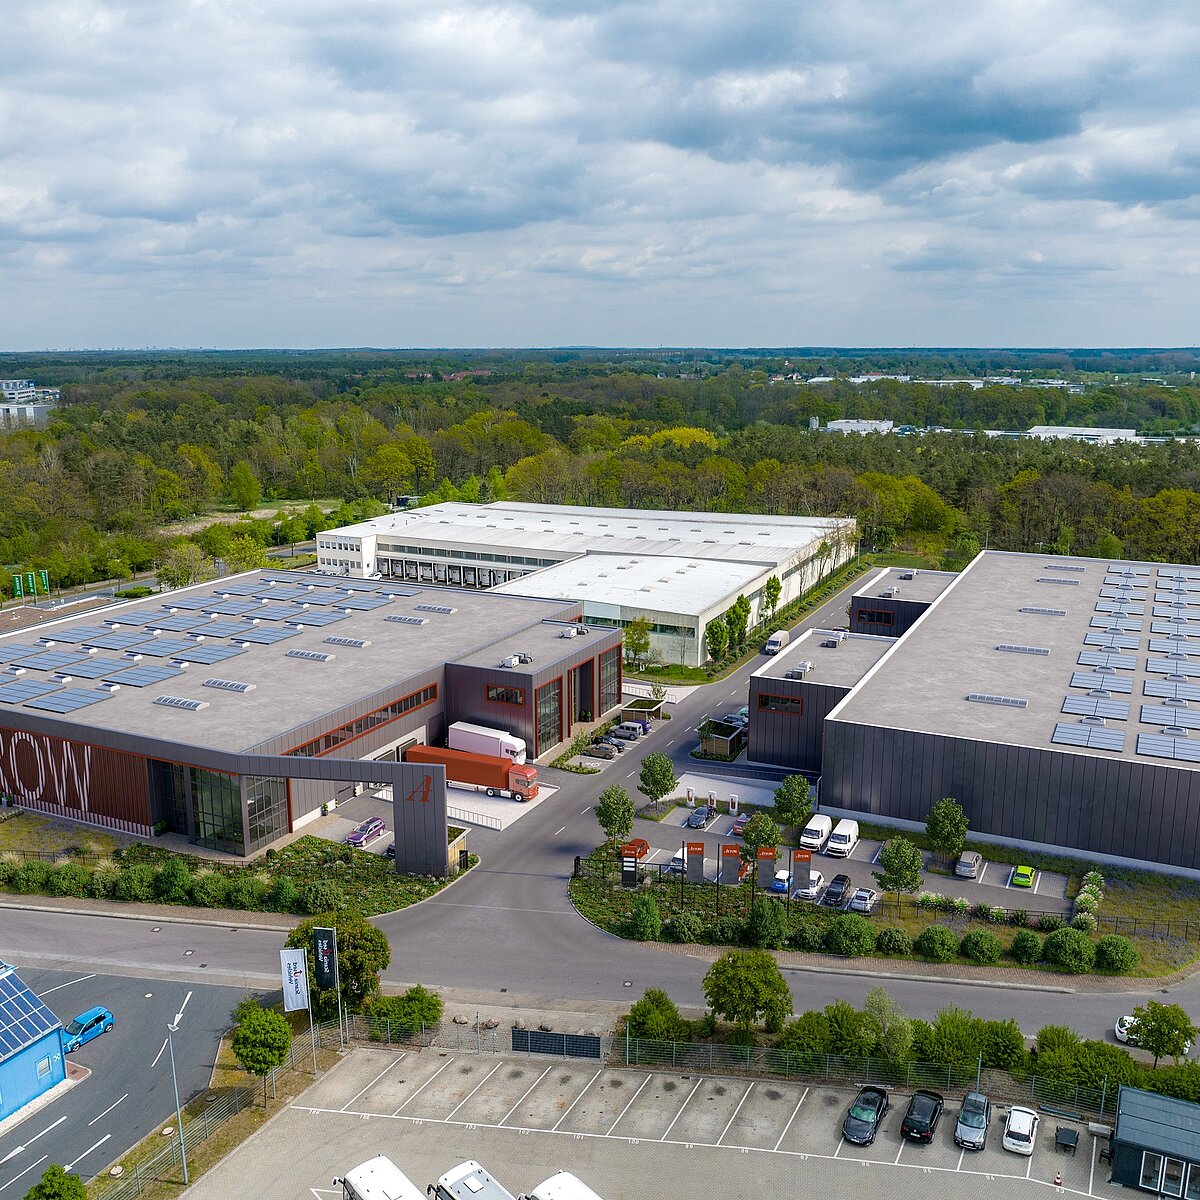 Aerial view of the industrial park in Ludwigsfelde